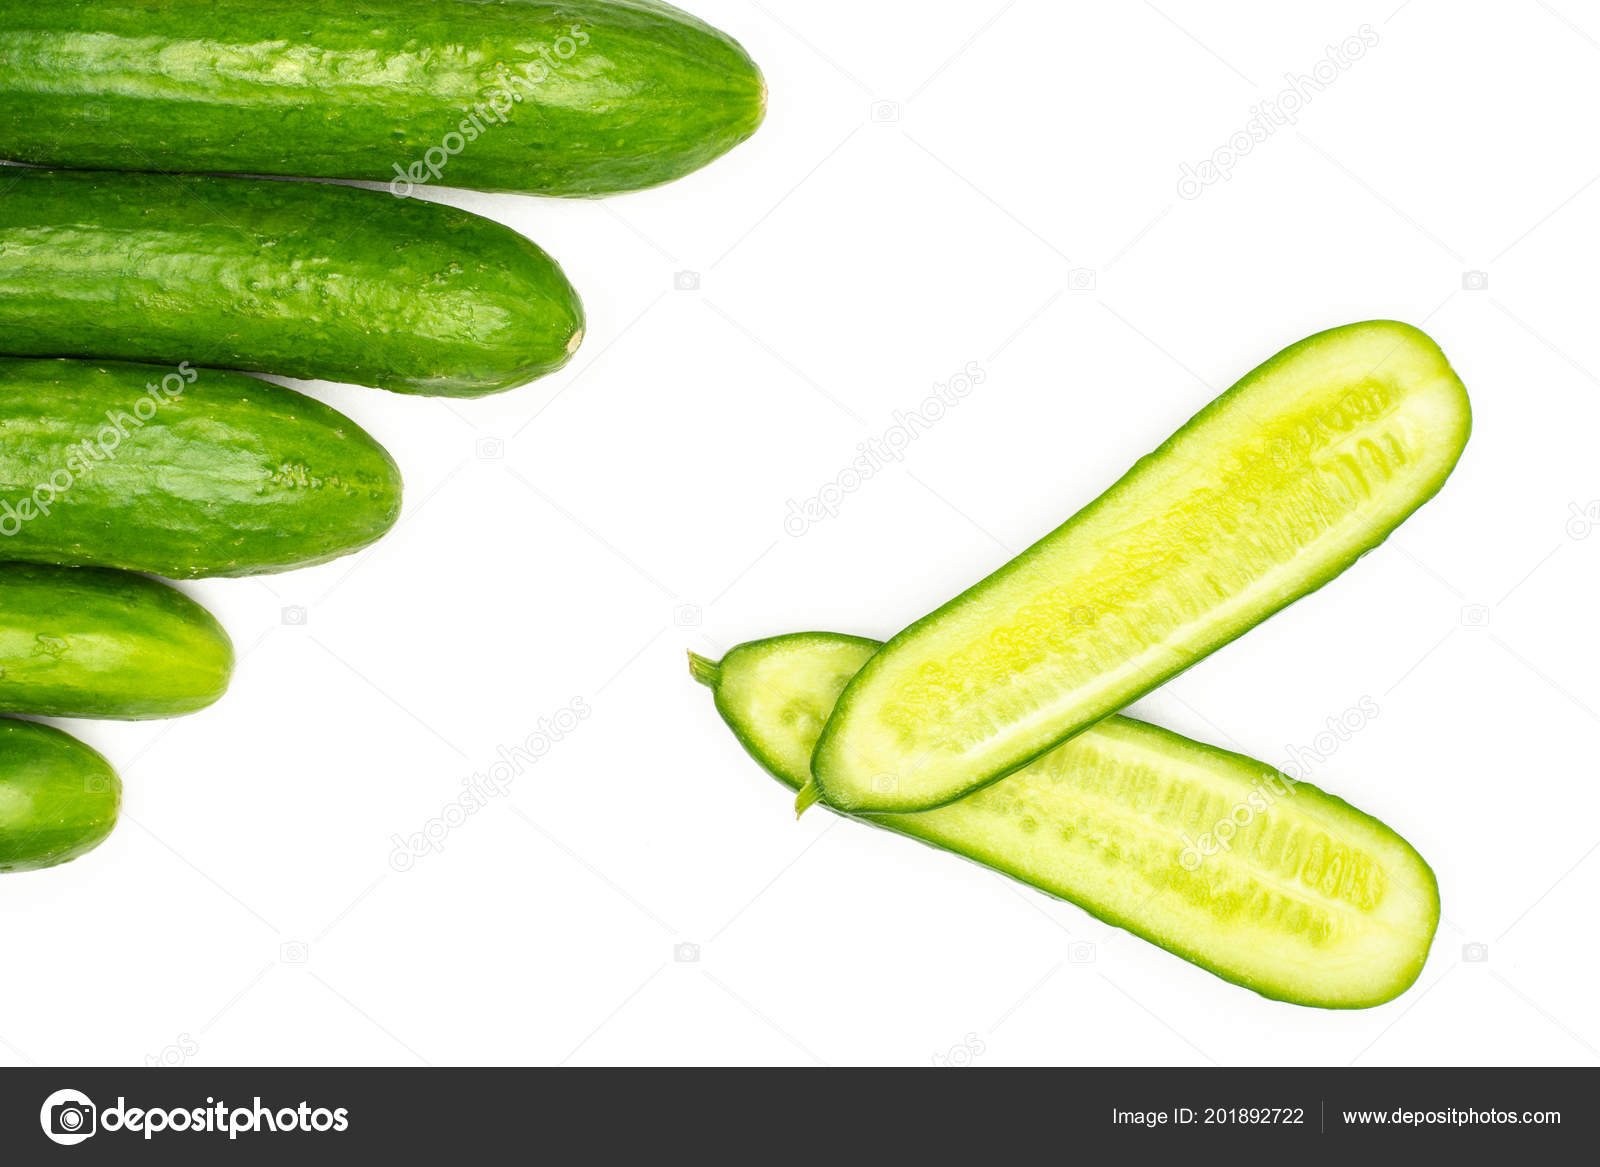 https://st4.depositphotos.com/14836424/20189/i/1600/depositphotos_201892722-stock-photo-five-fresh-mini-cucumbers-one.jpg